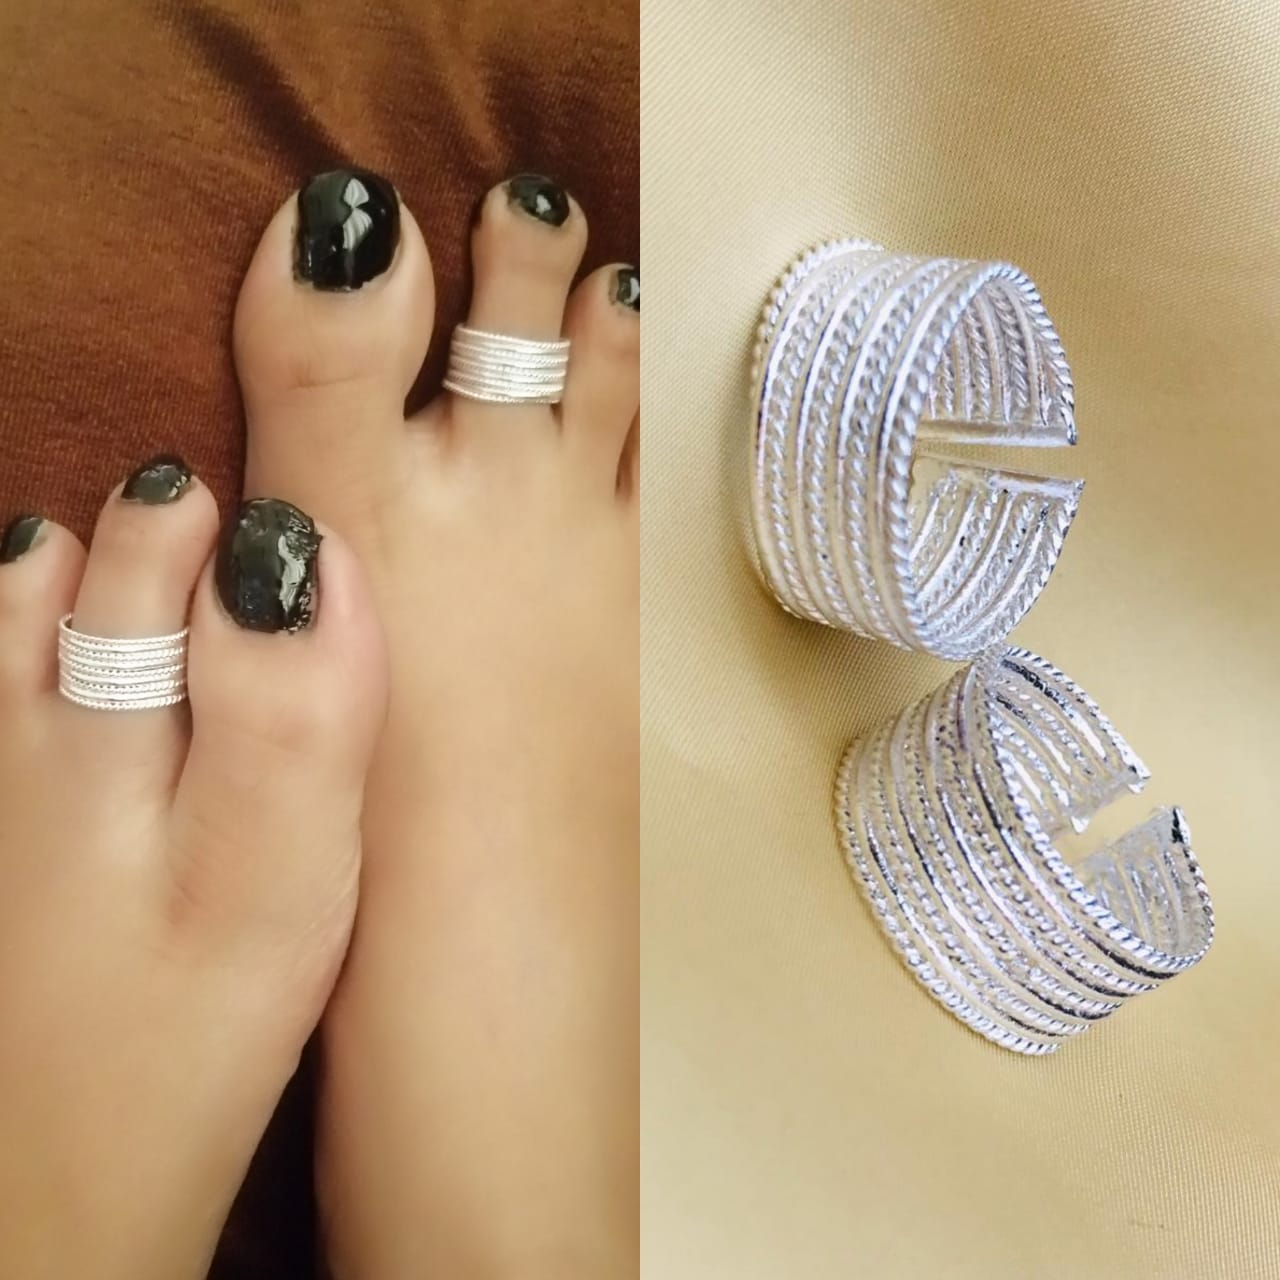 Silver toe-rings - ABDESIGNS - 3134178